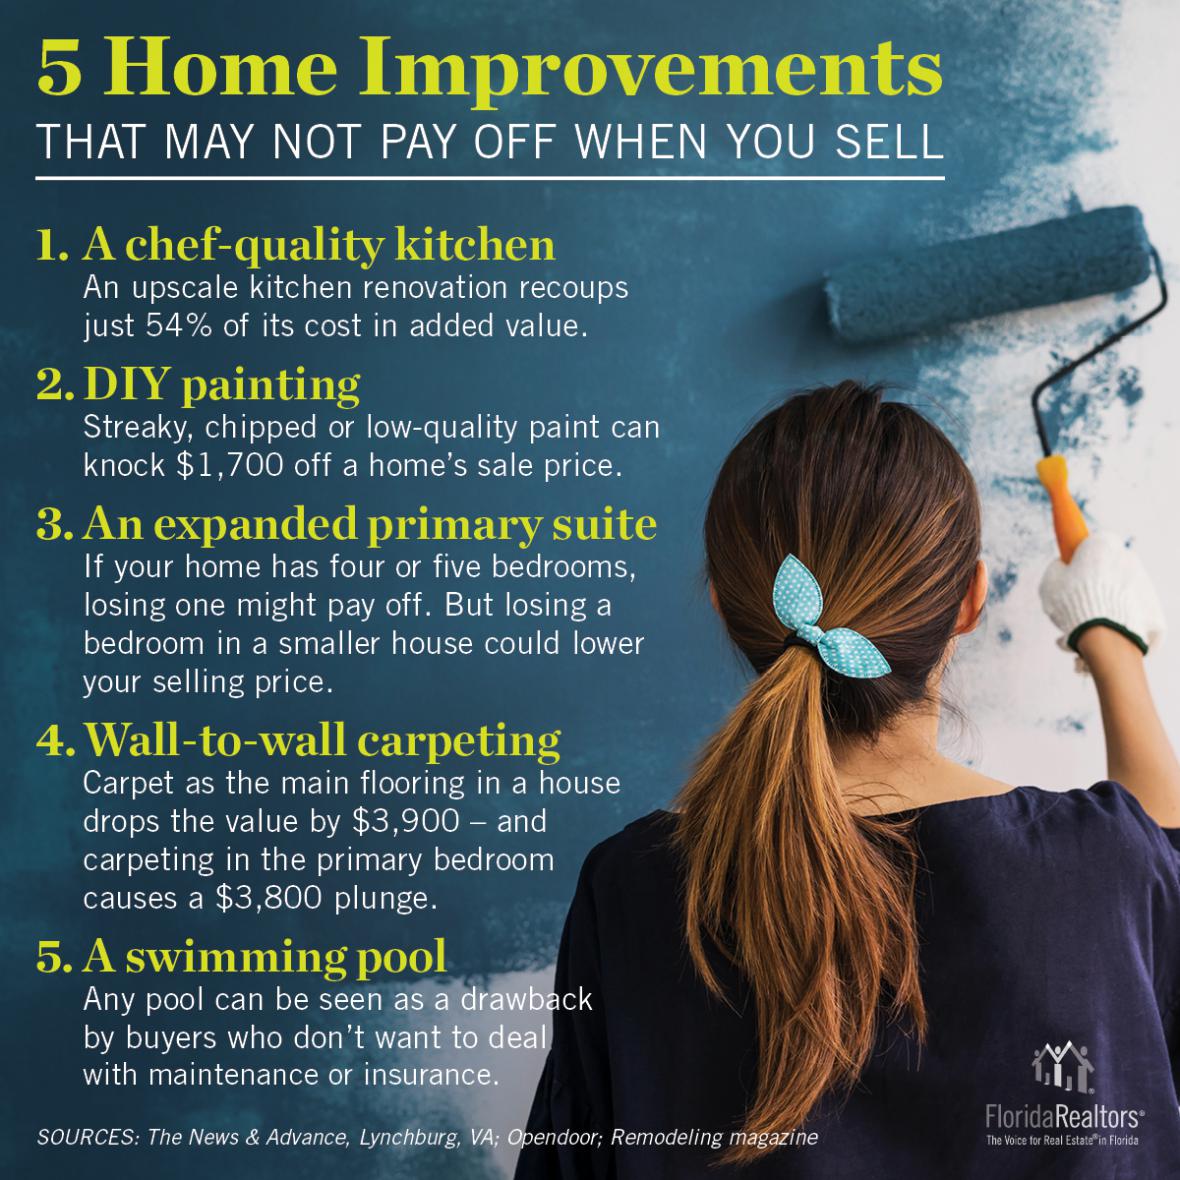 Home improvements infographic